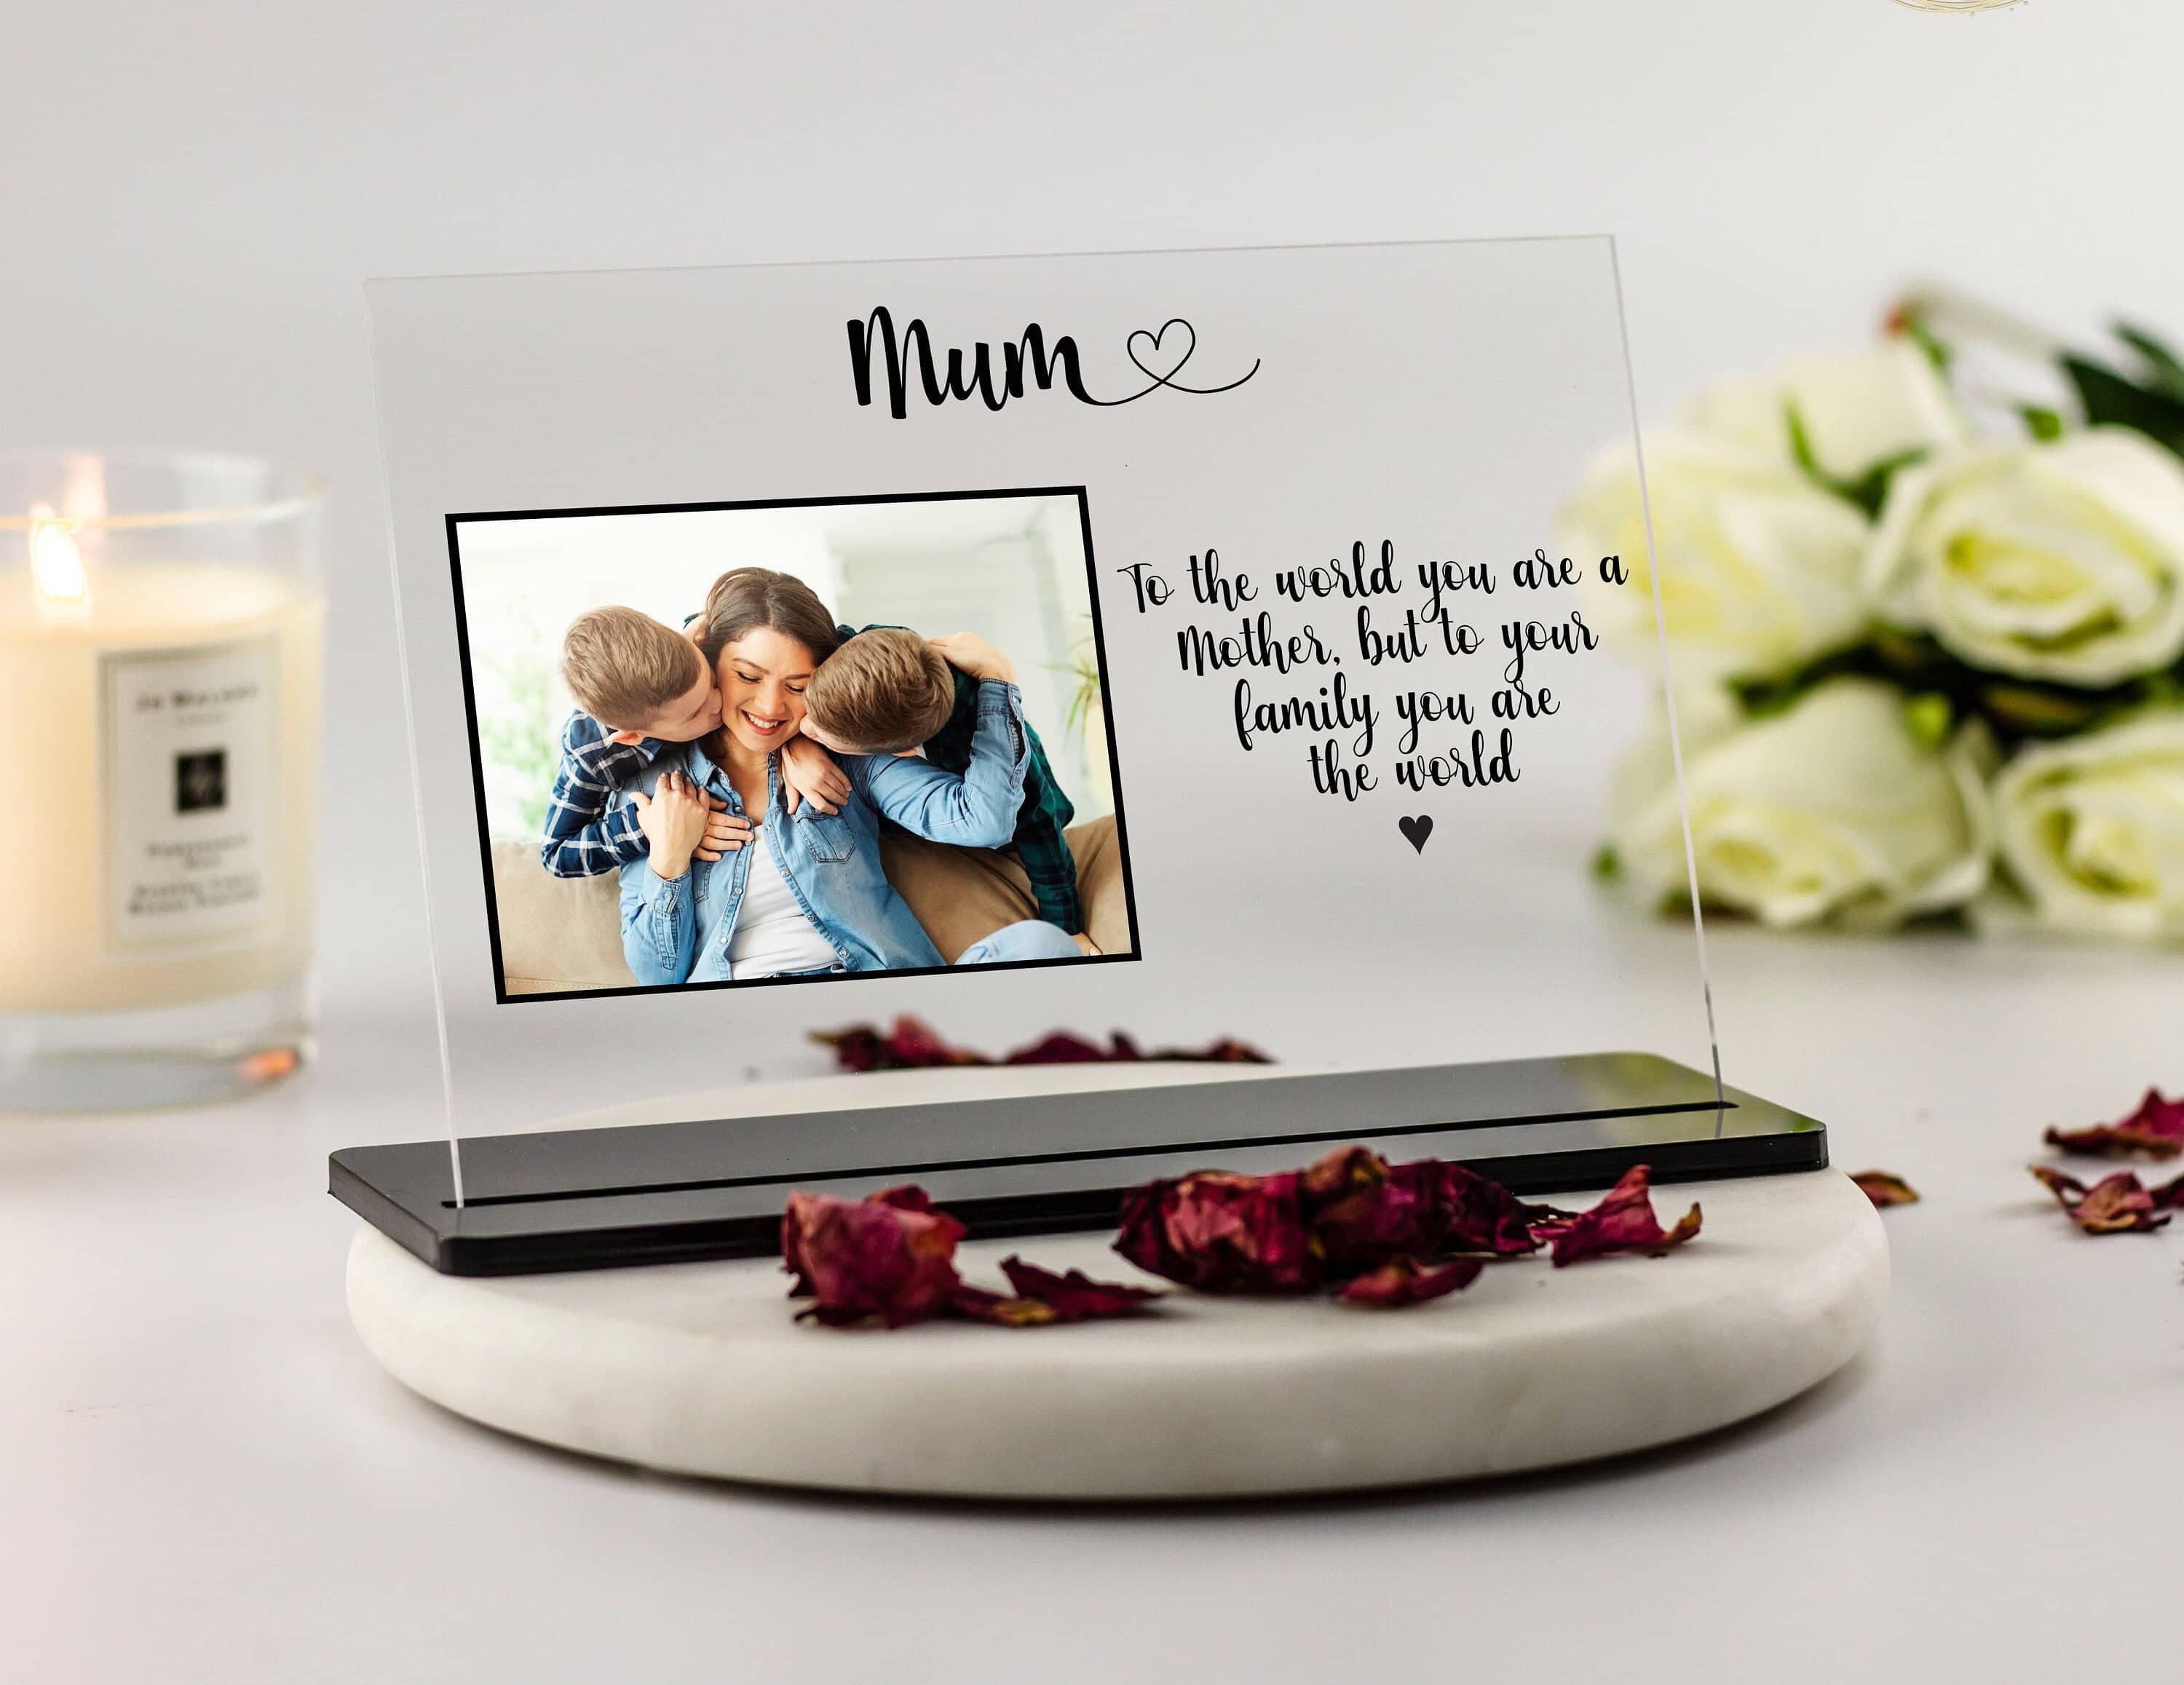 Mum Gifts, Personalised Mothers Day Gift, Sentimental Gift for Mom, Mum Birthday Gift, Photo Keepsake Gift, Photo Frame Acrylic Photo Plaque